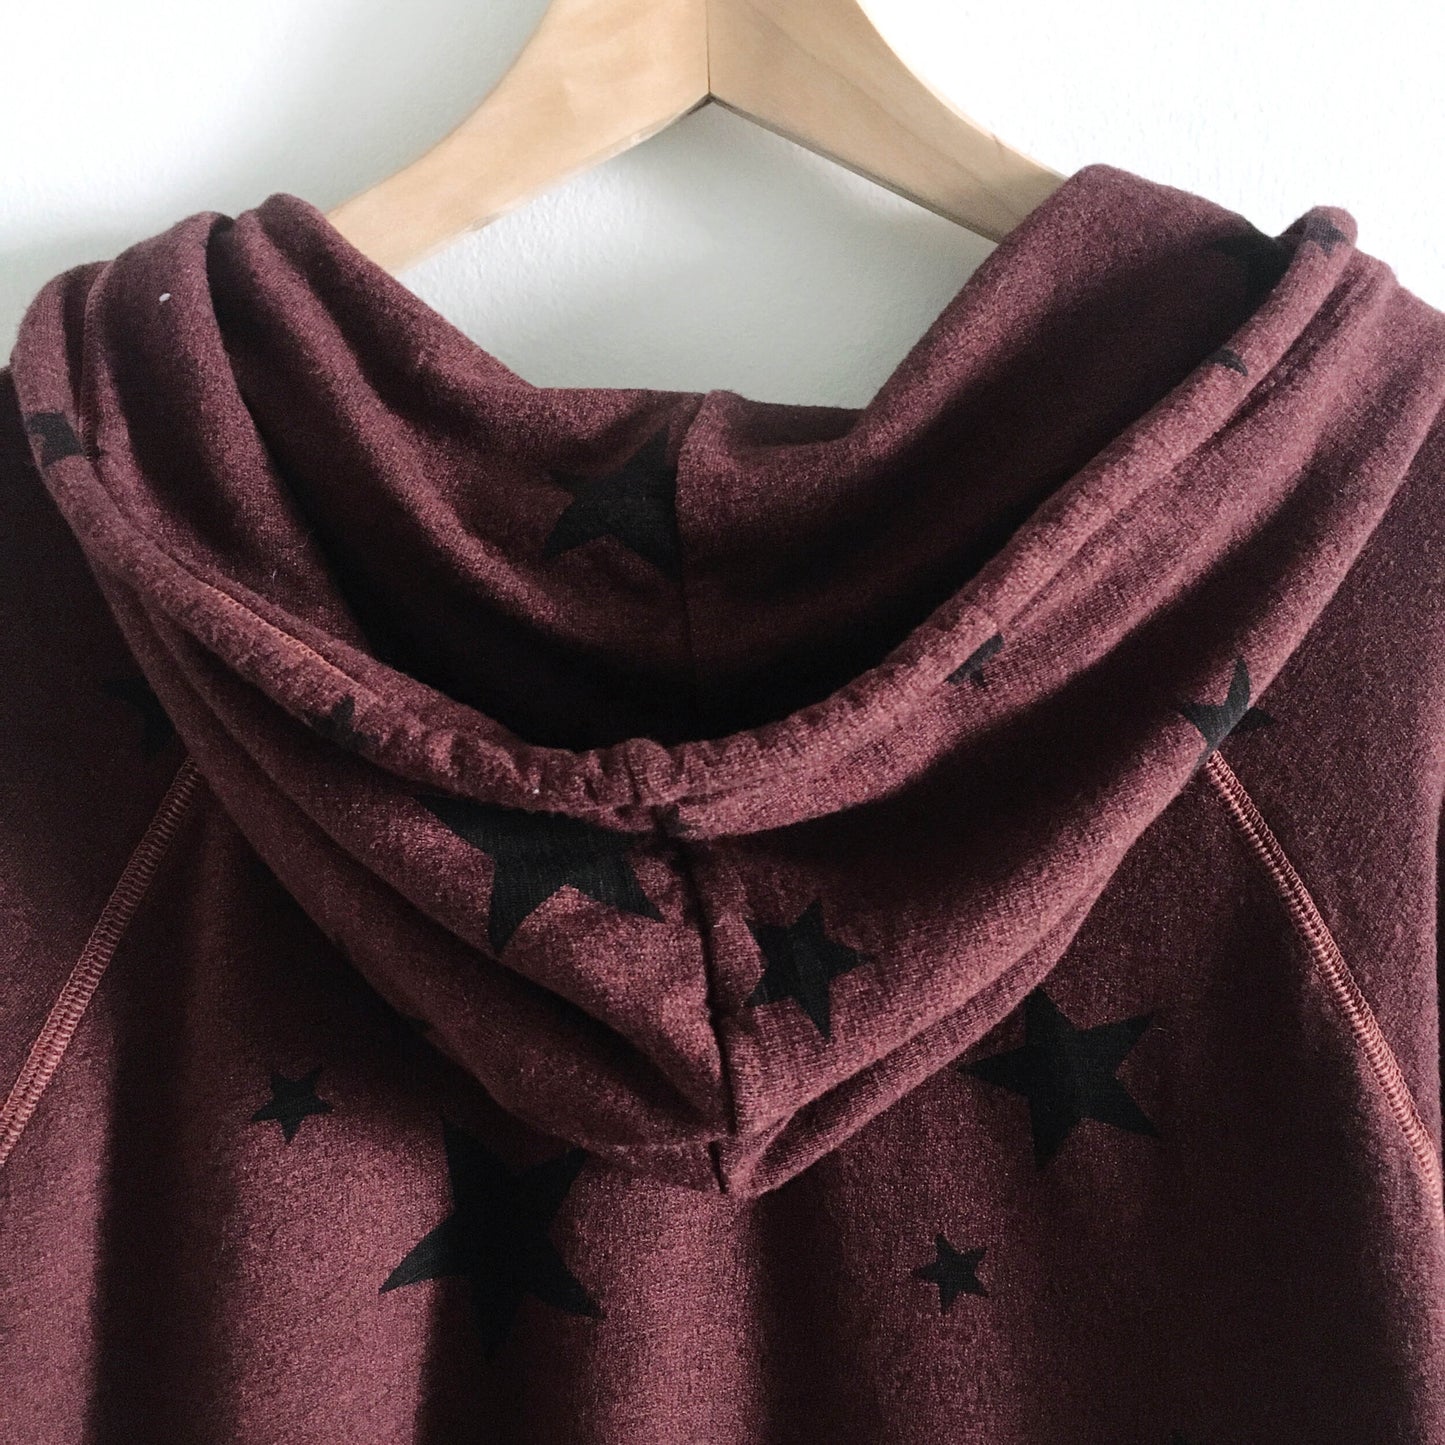 Sundry stars crop hoodie - size 3